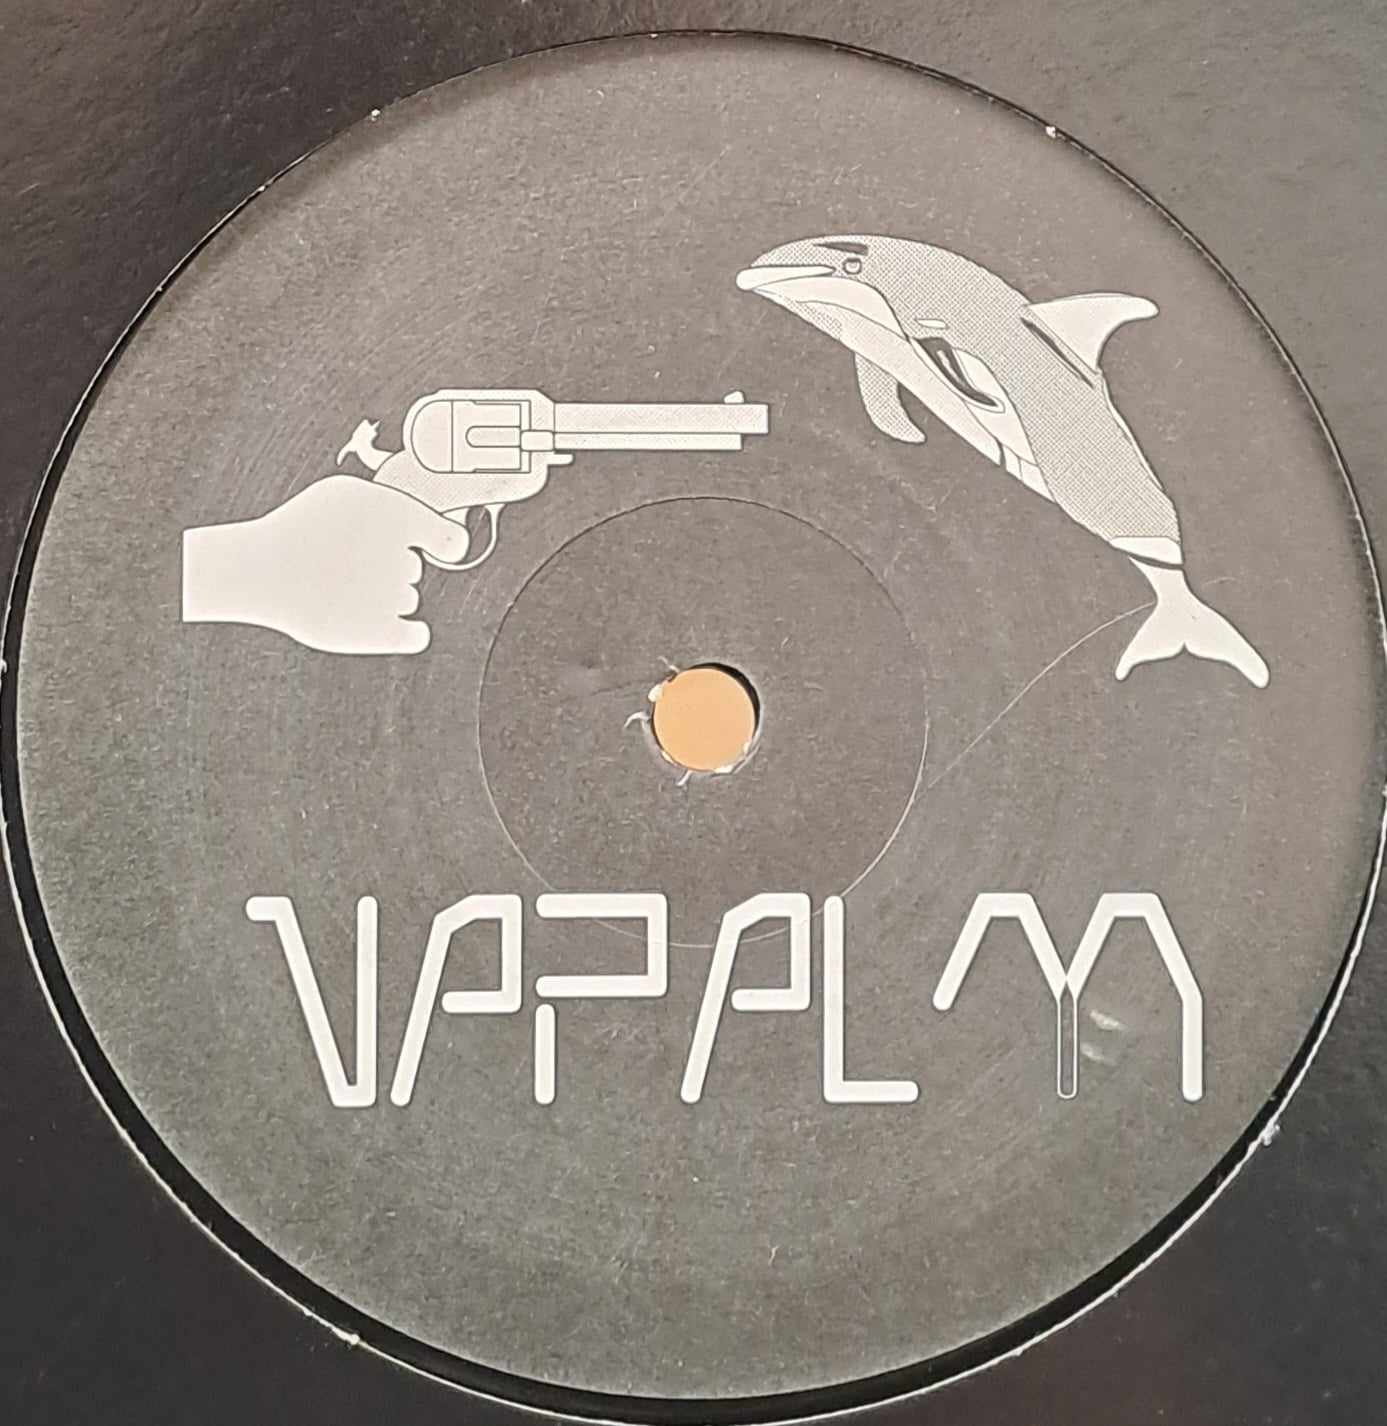 Napalm 4 - vinyle hardcore